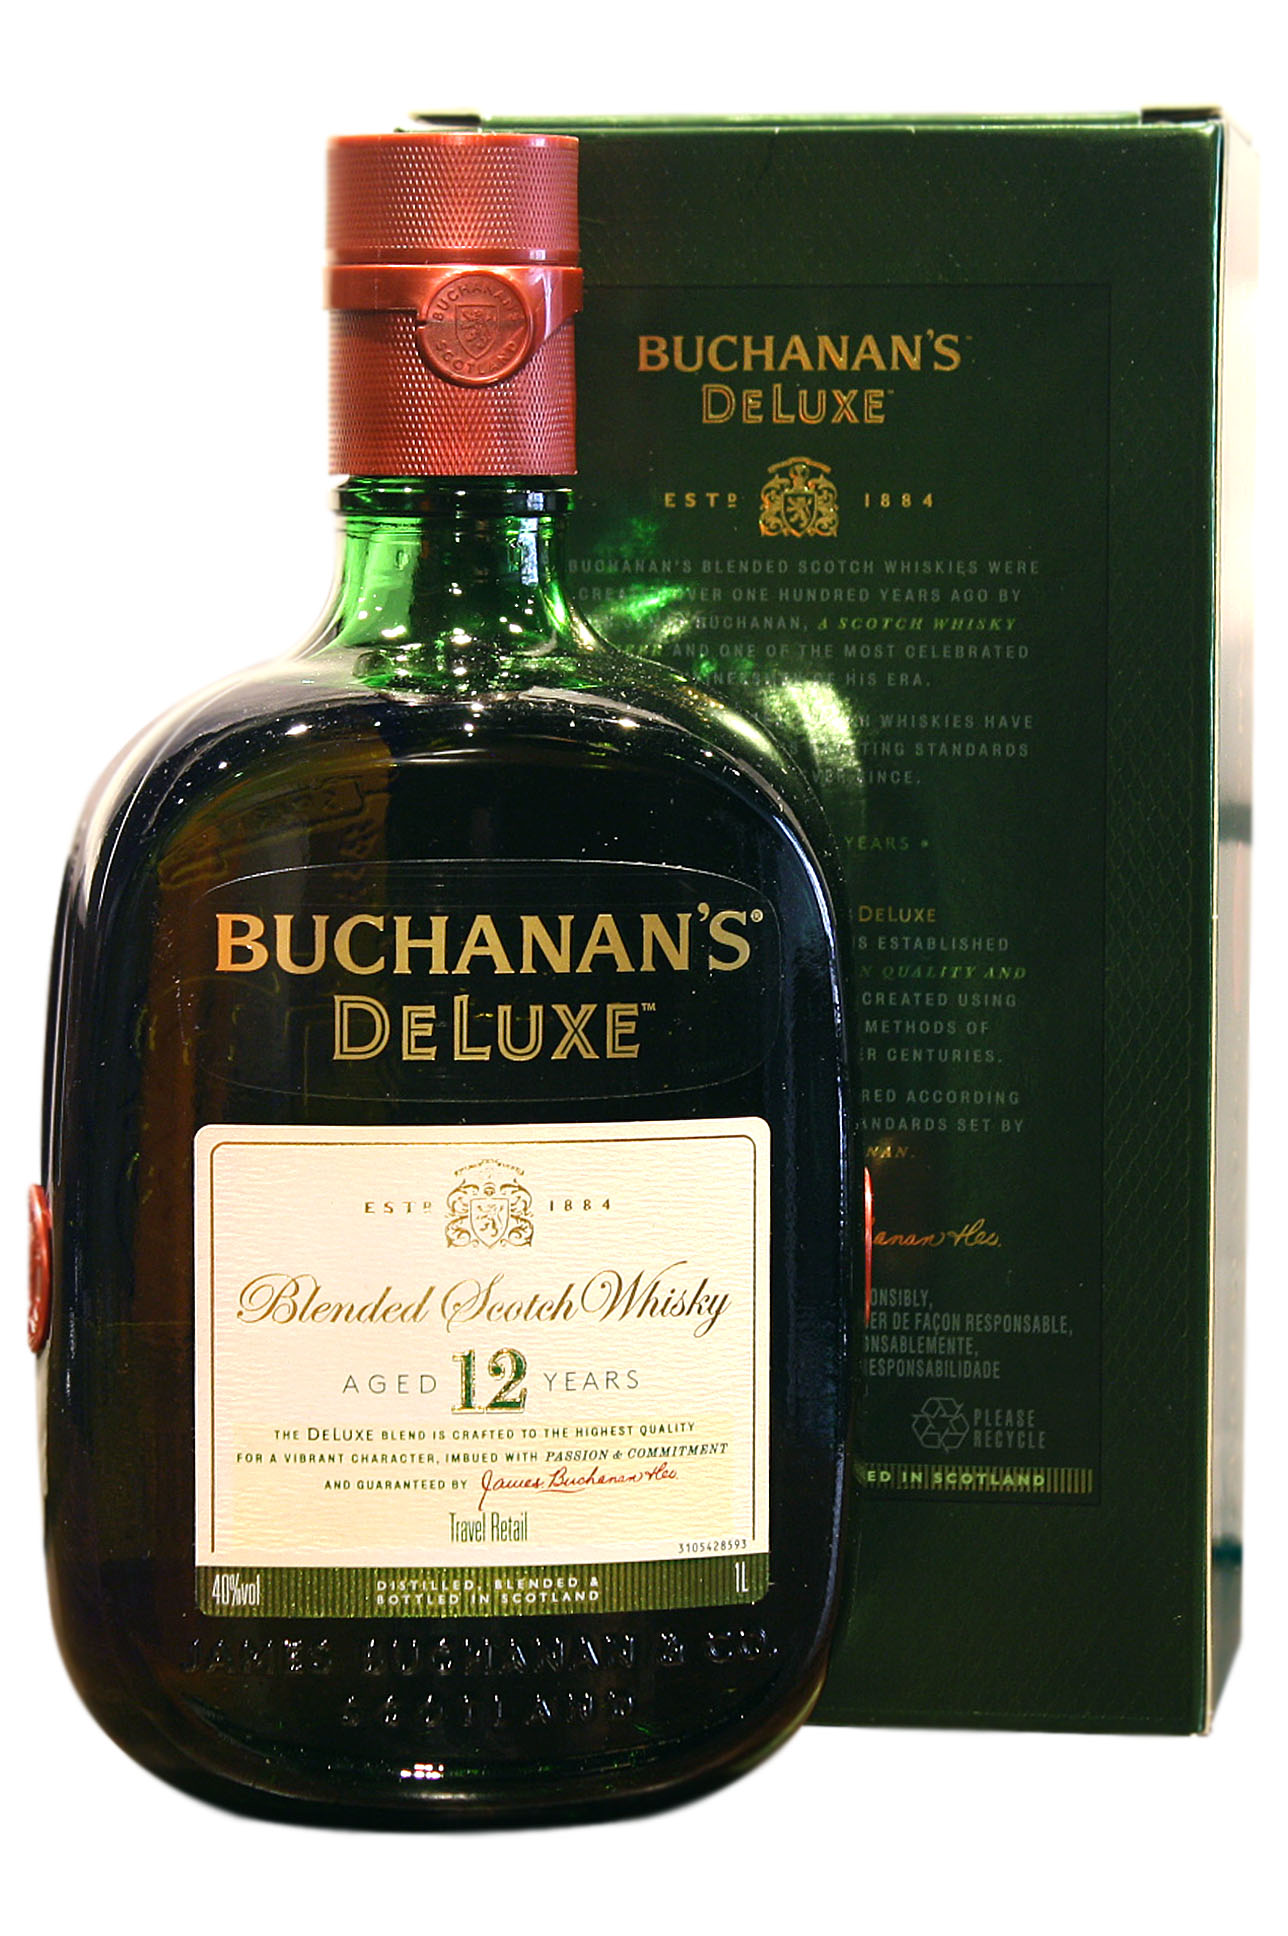 Buchanans deluxe Whisky